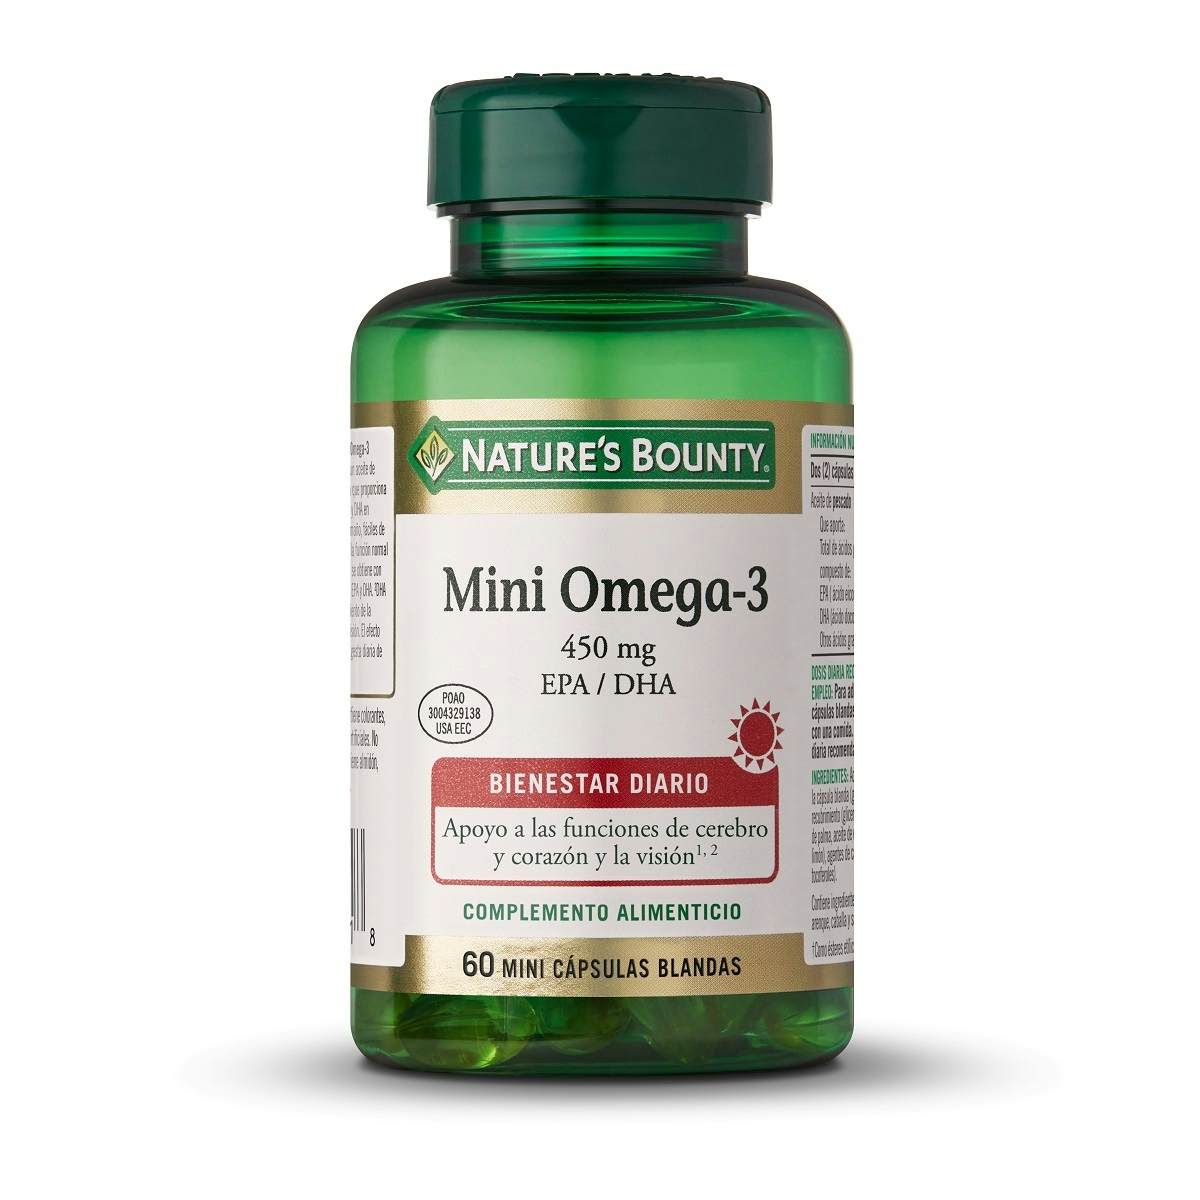 Mini Omega-3 450 mg EPA/DHA - 60 mini perlas